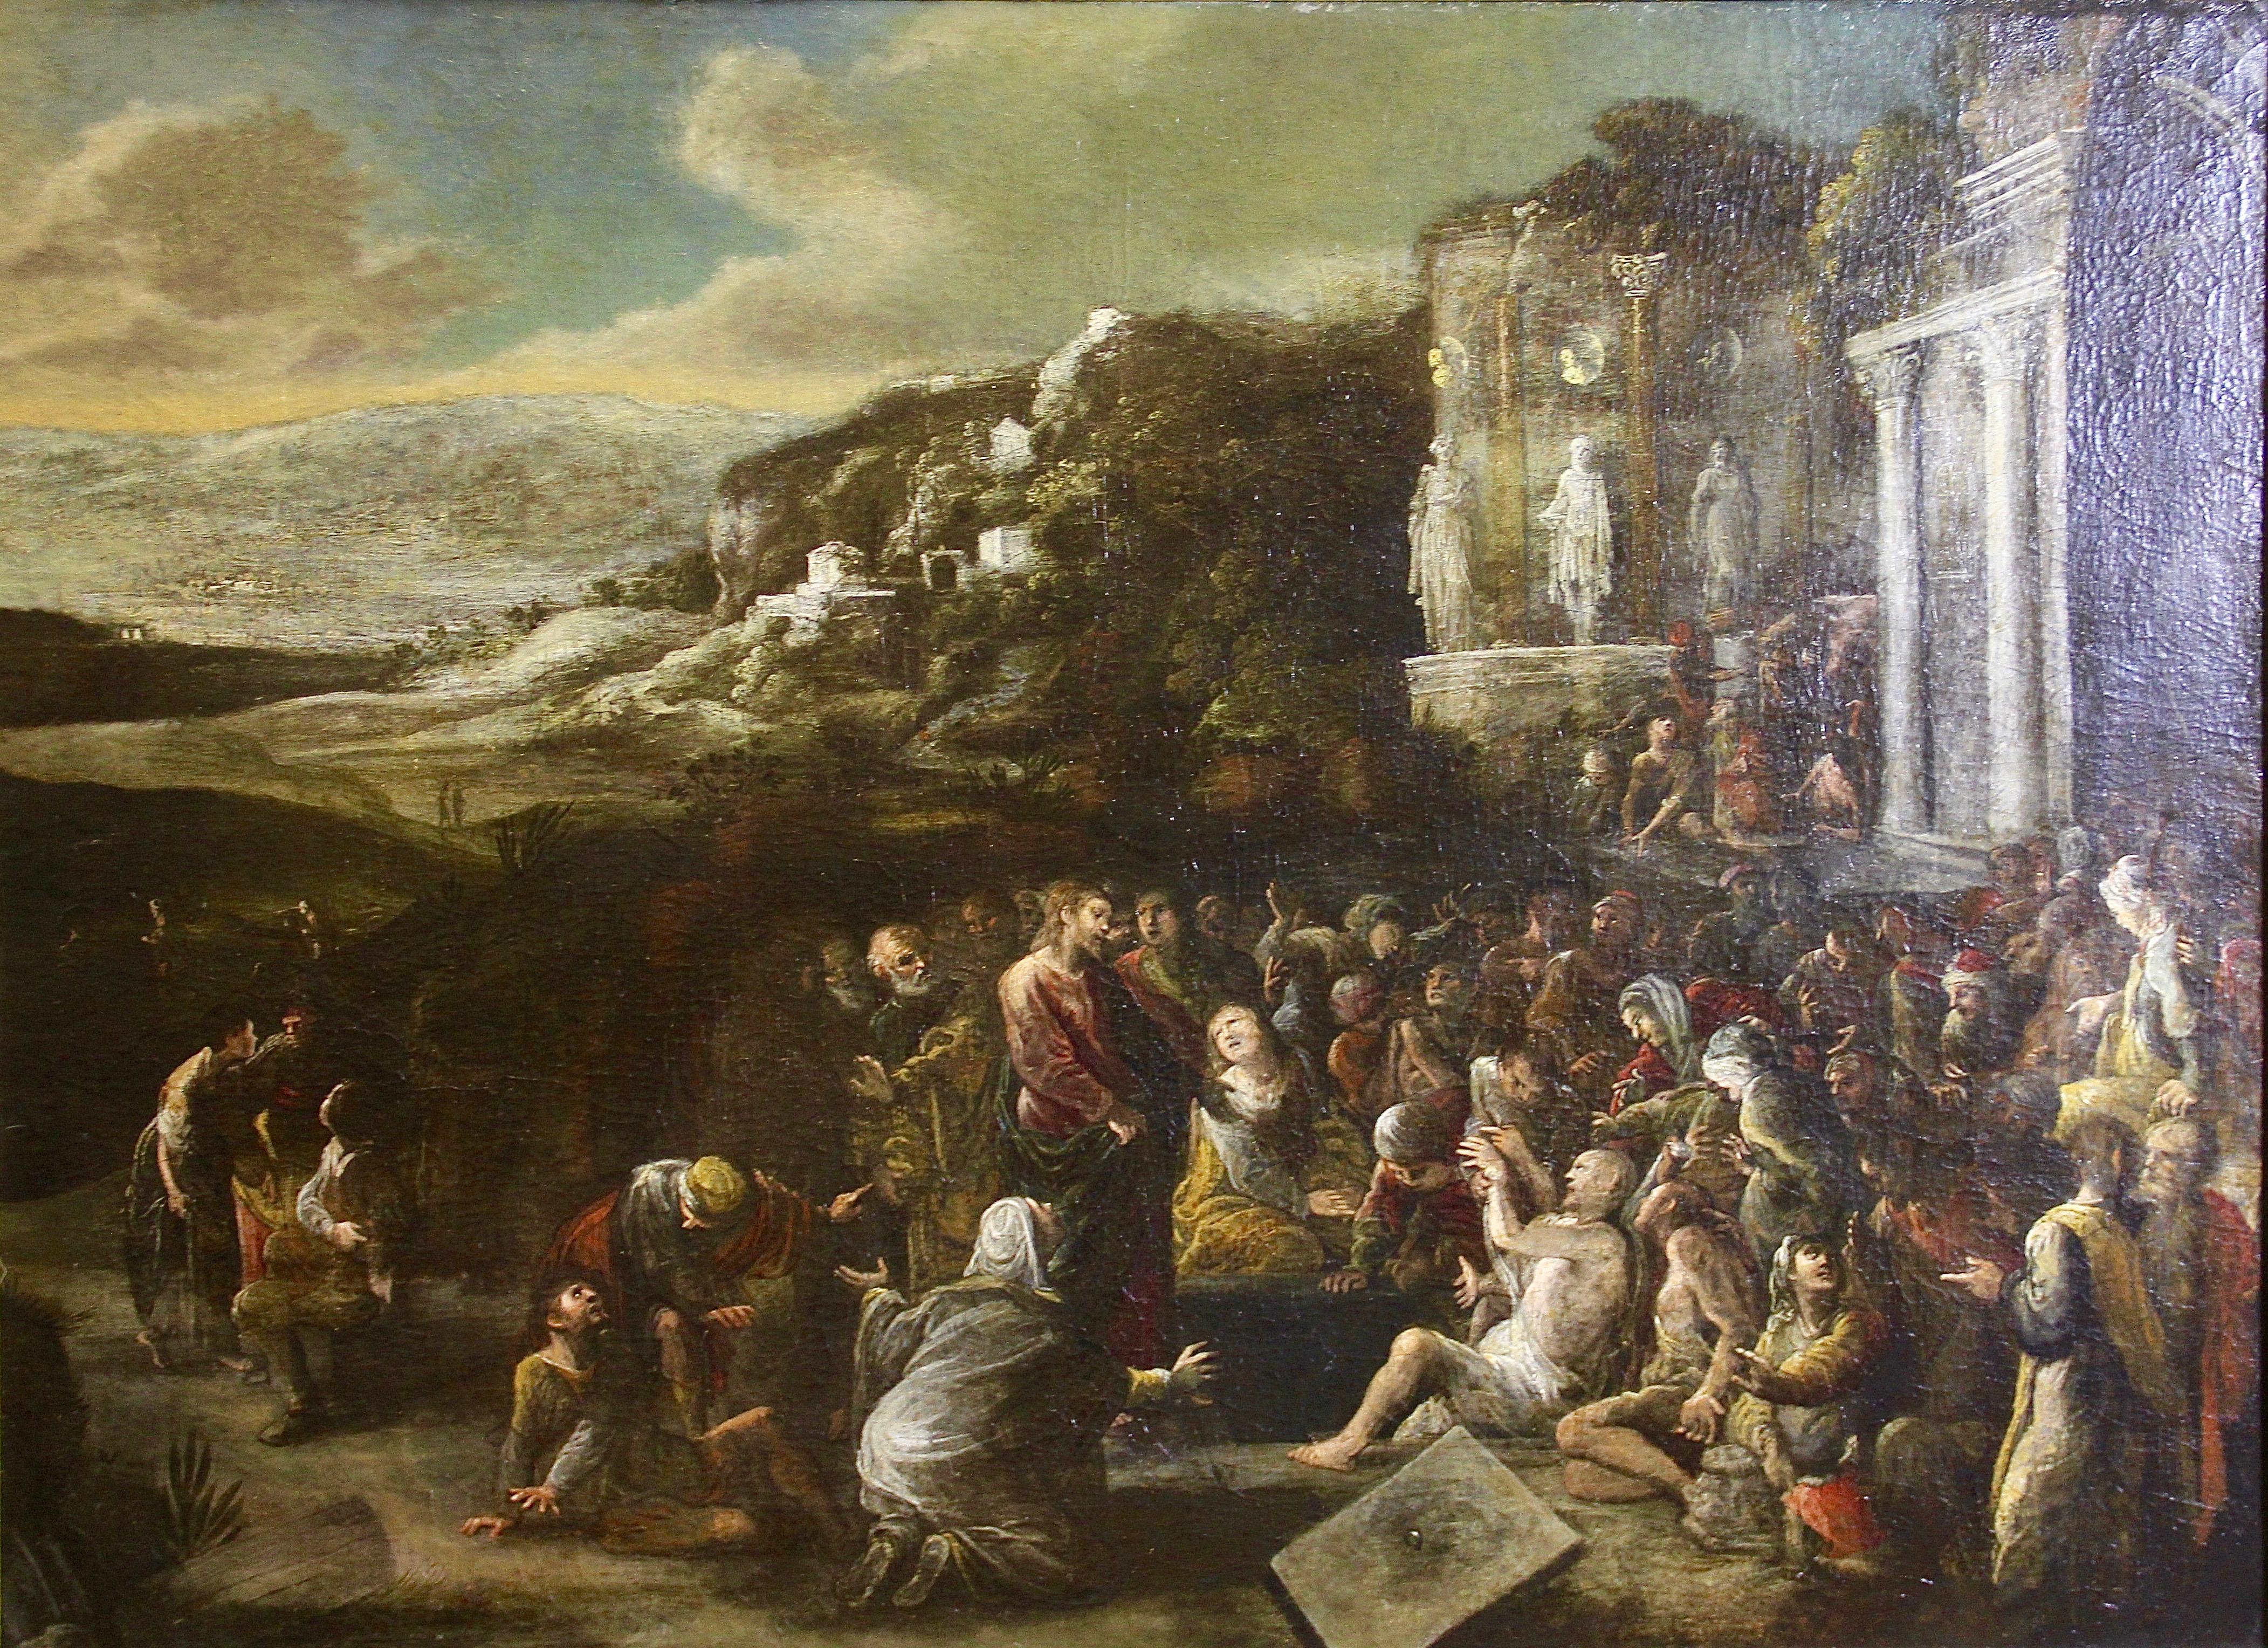 Antique, decorative oil painting, 18th century. Christian scene.